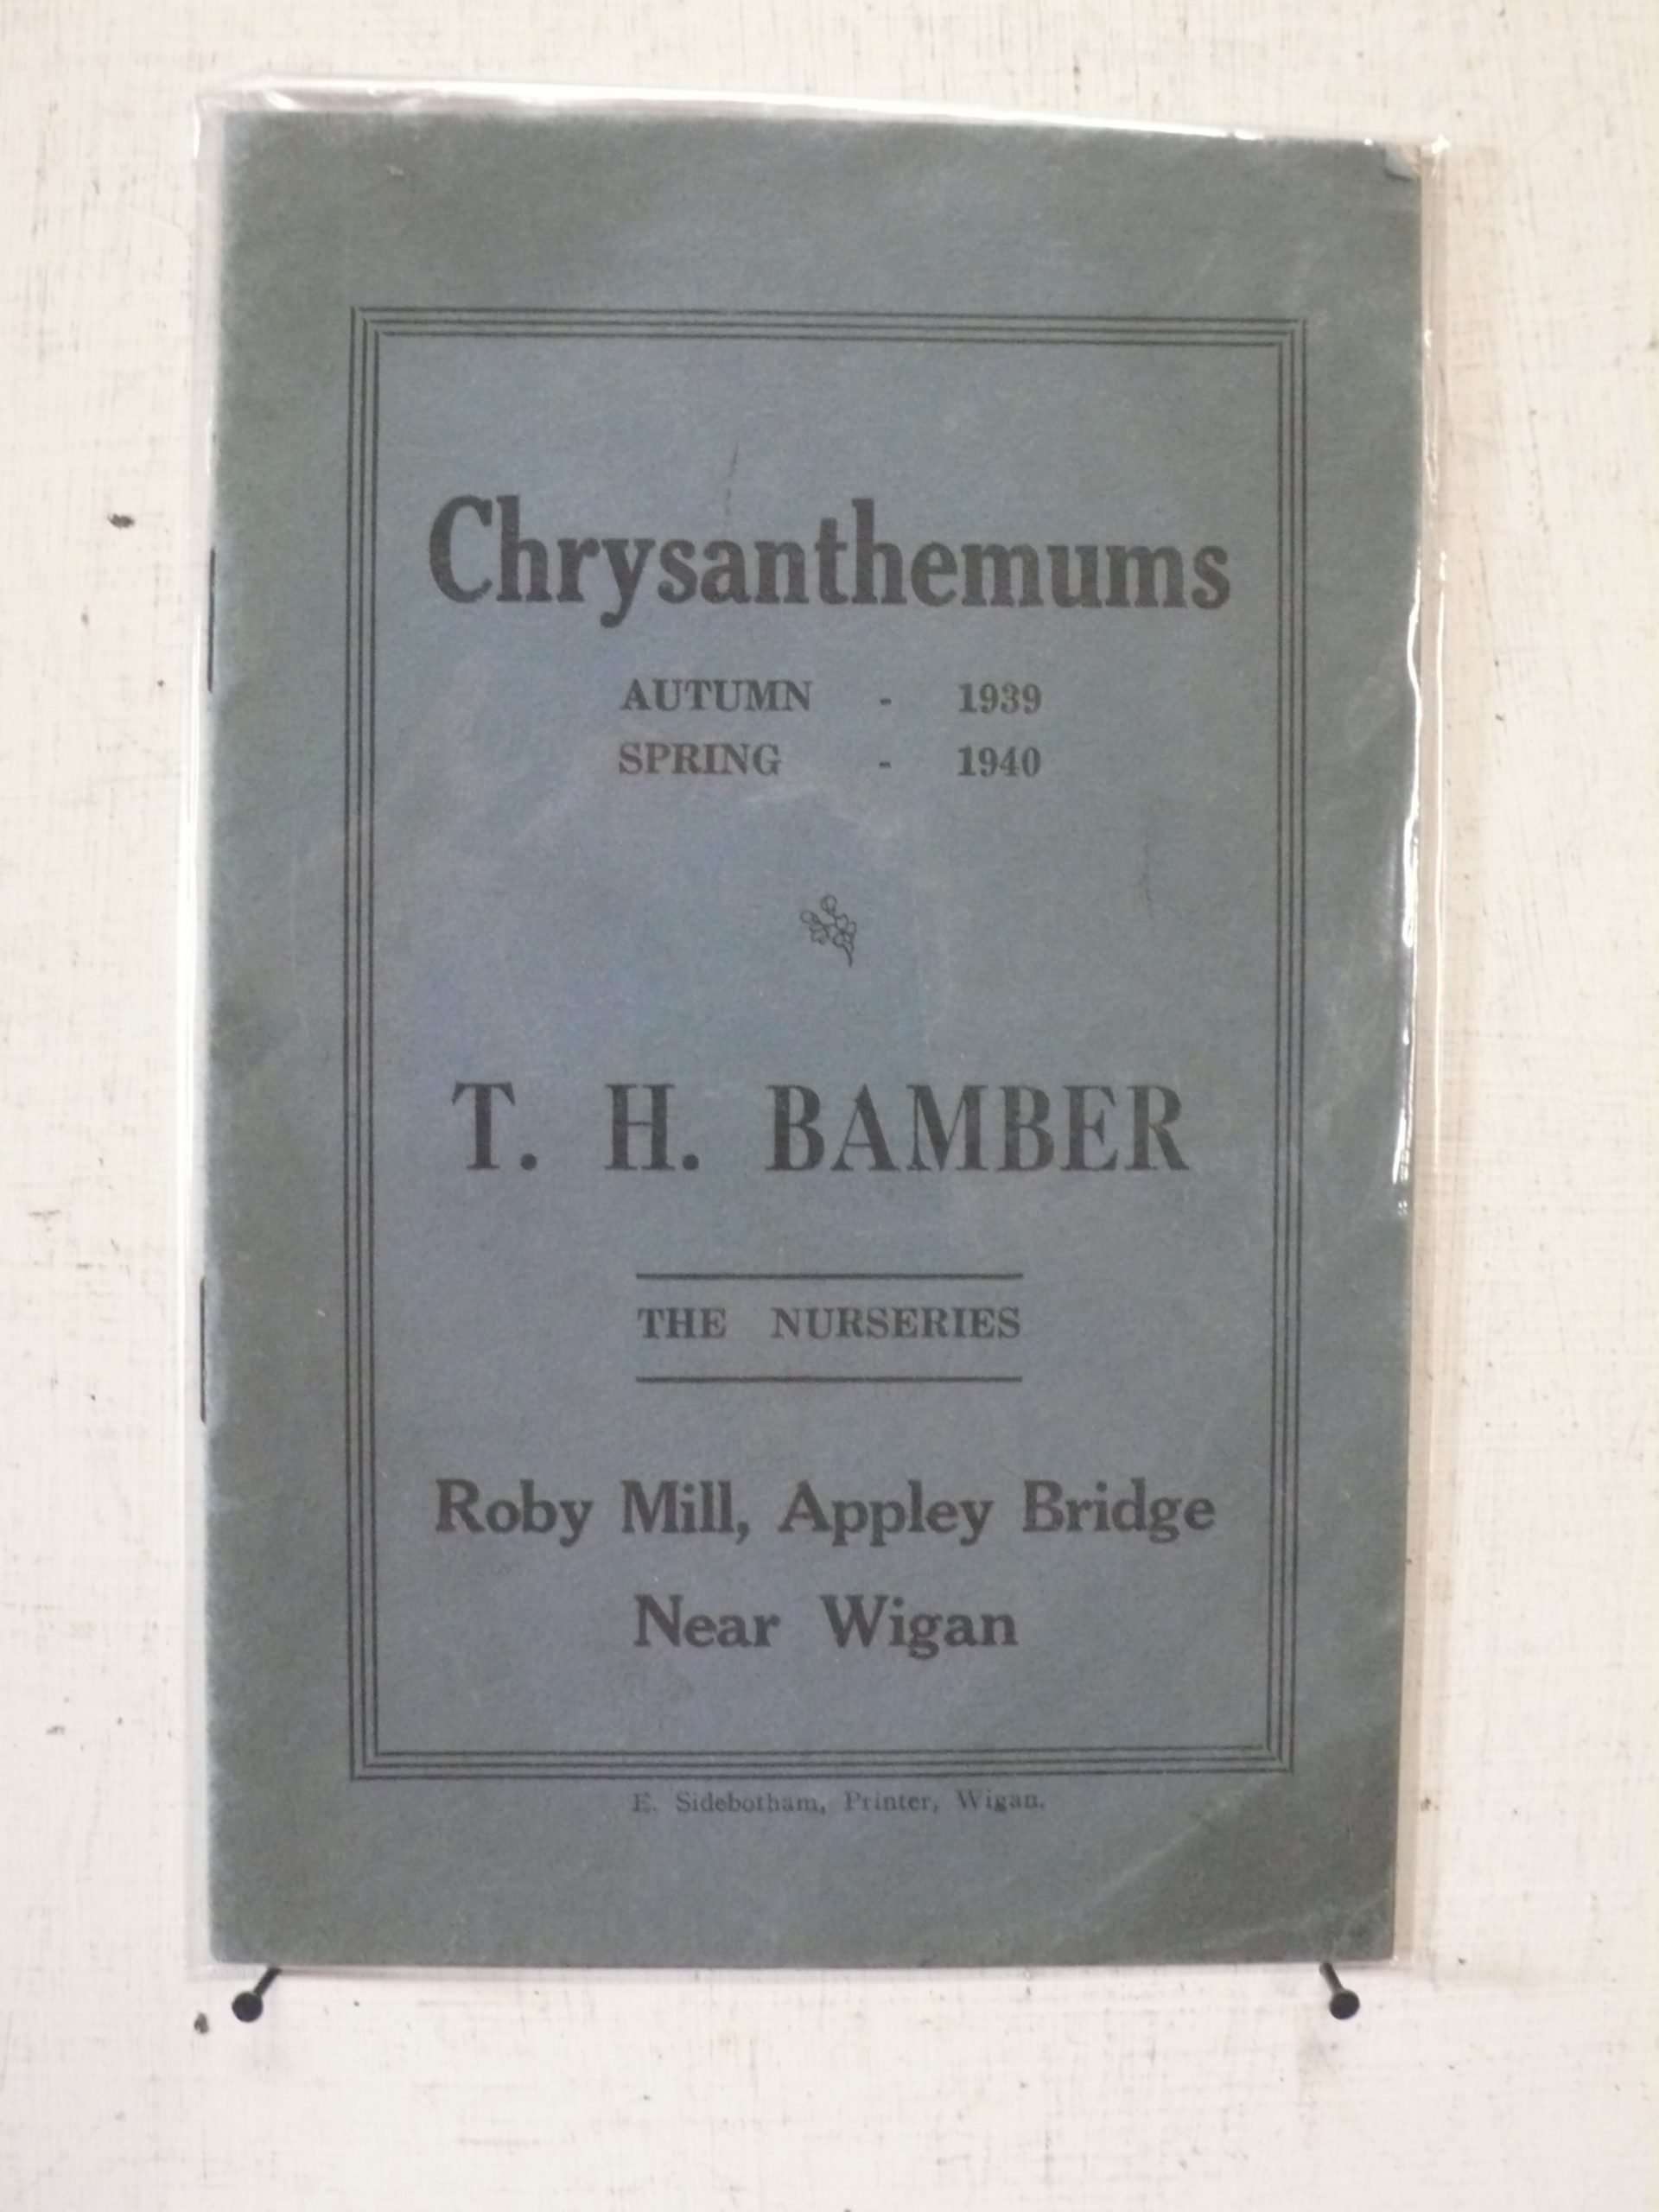 T H Bamber Chrysanthemum Catalogue